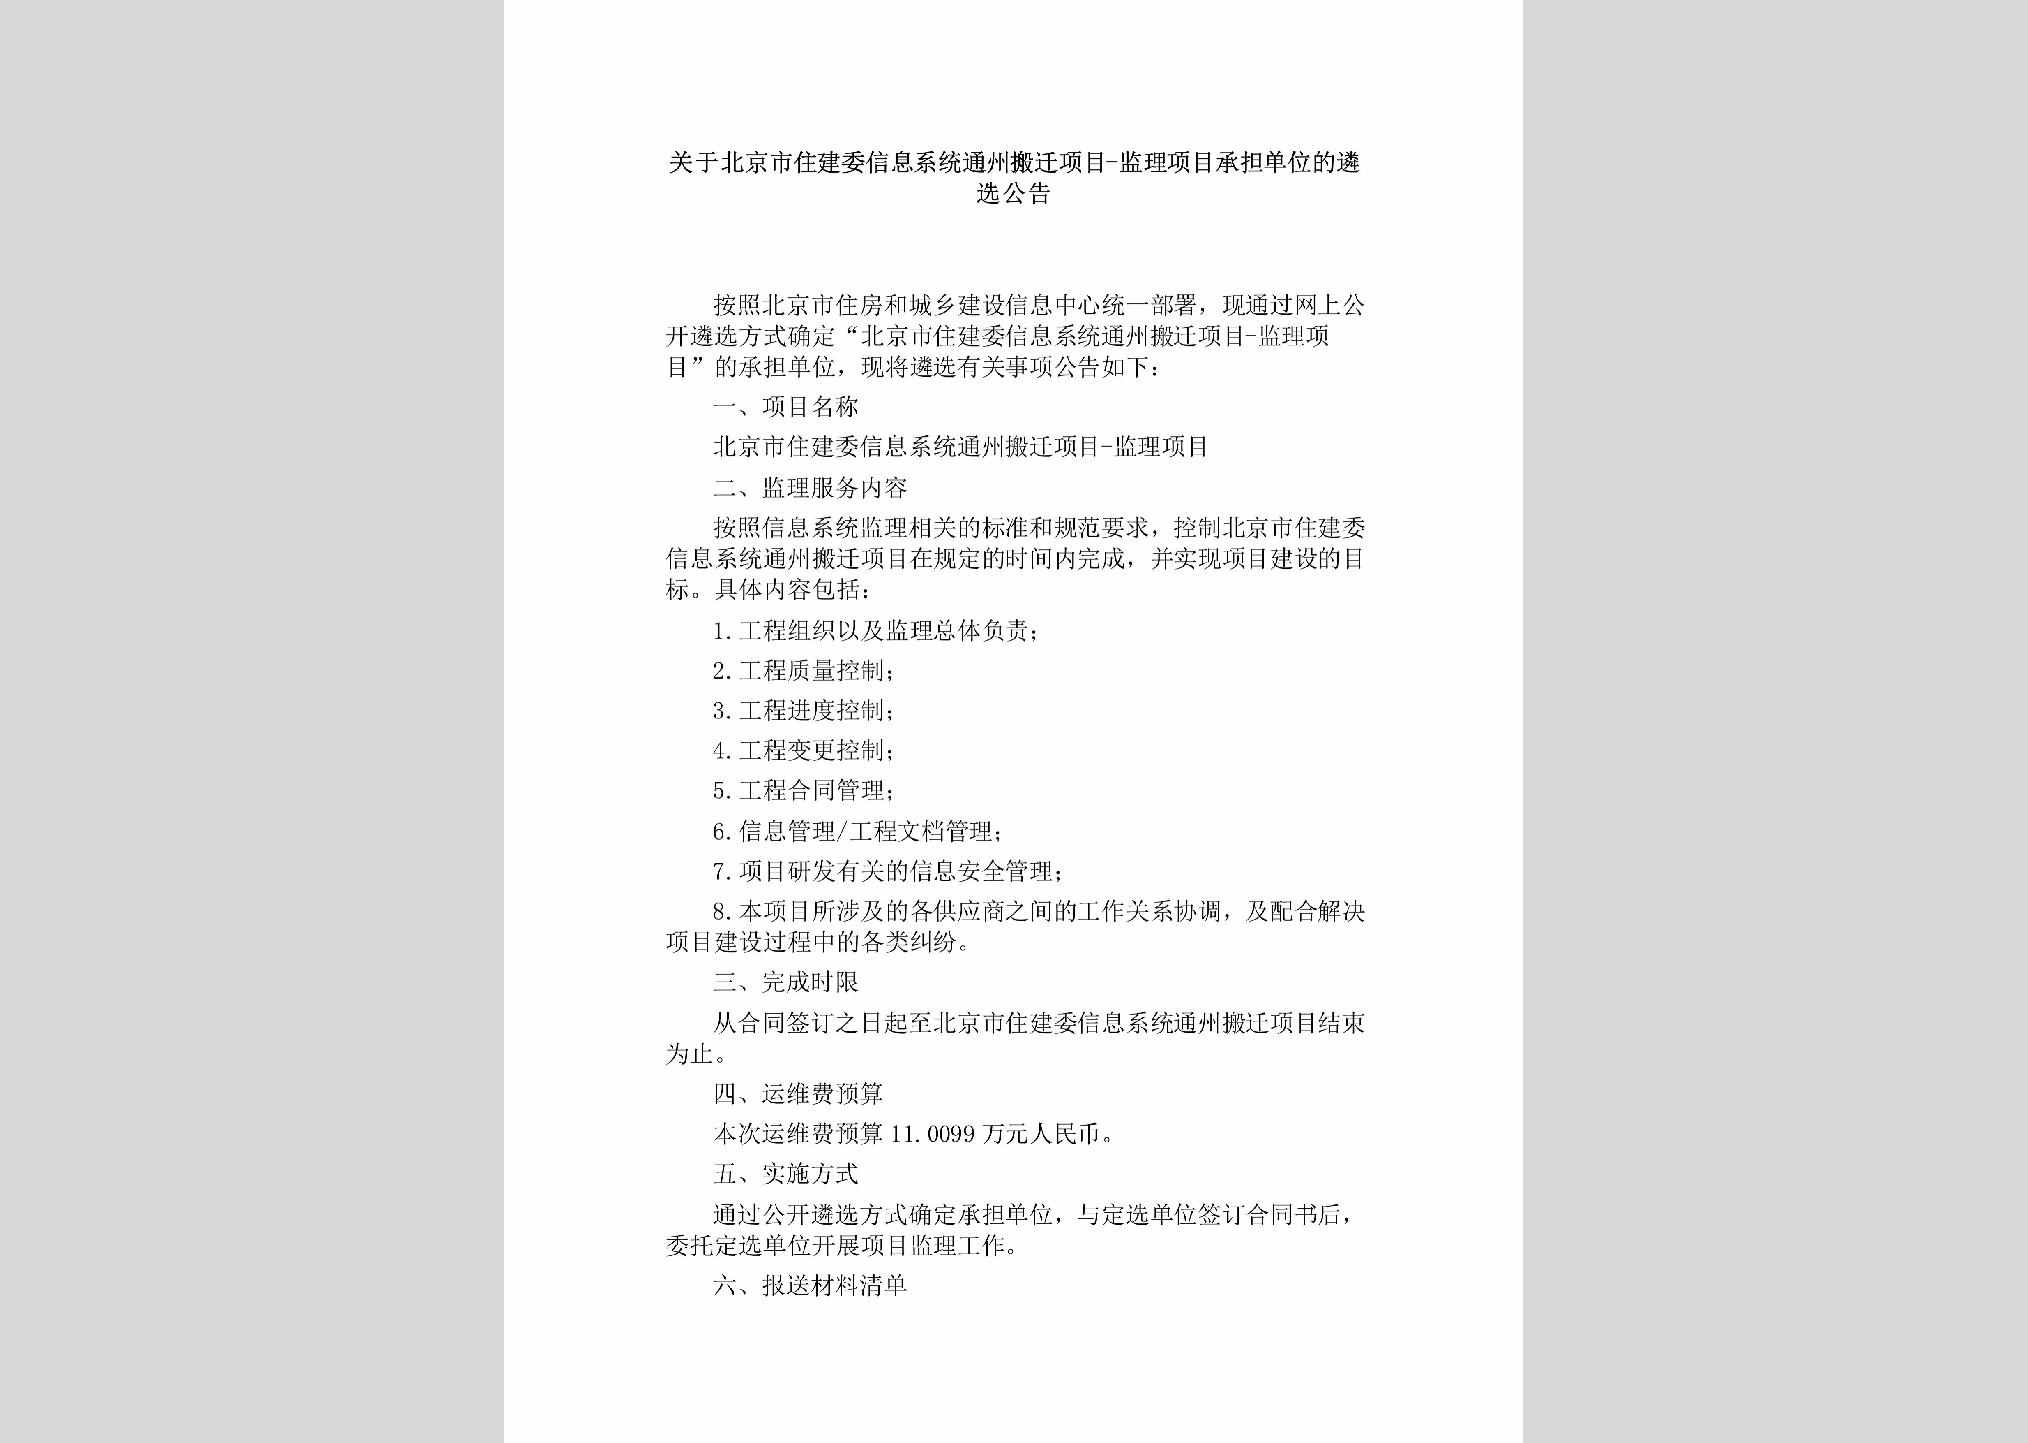 BJ-TZBQJLXM-2018：关于北京市住建委信息系统通州搬迁项目-监理项目承担单位的遴选公告